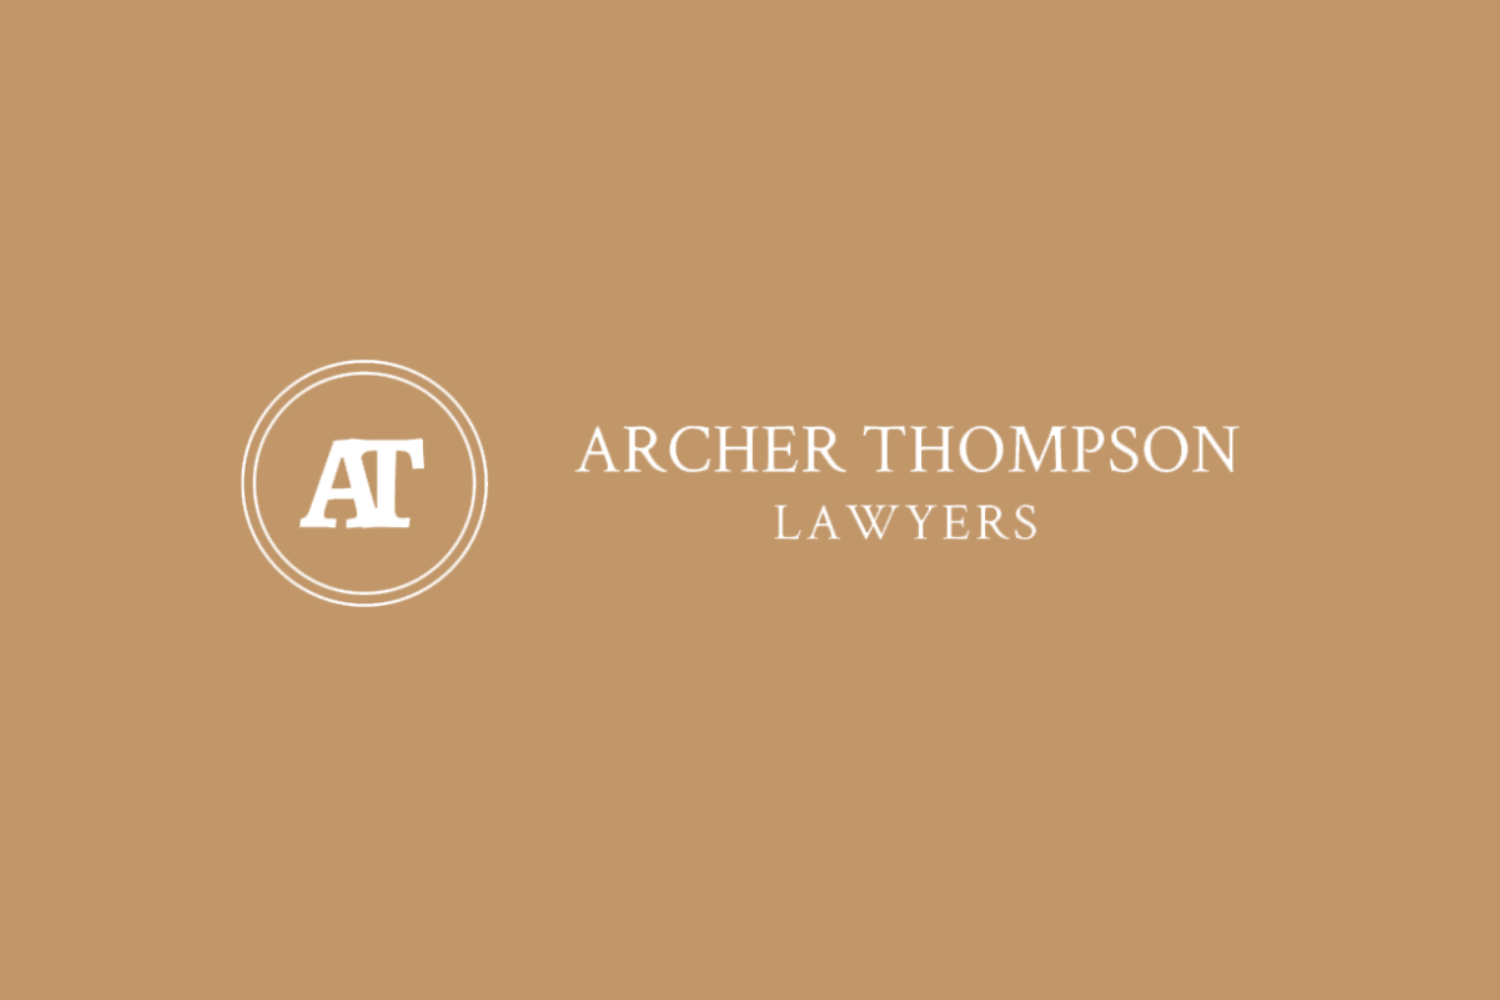 archer thompson lawyers afa